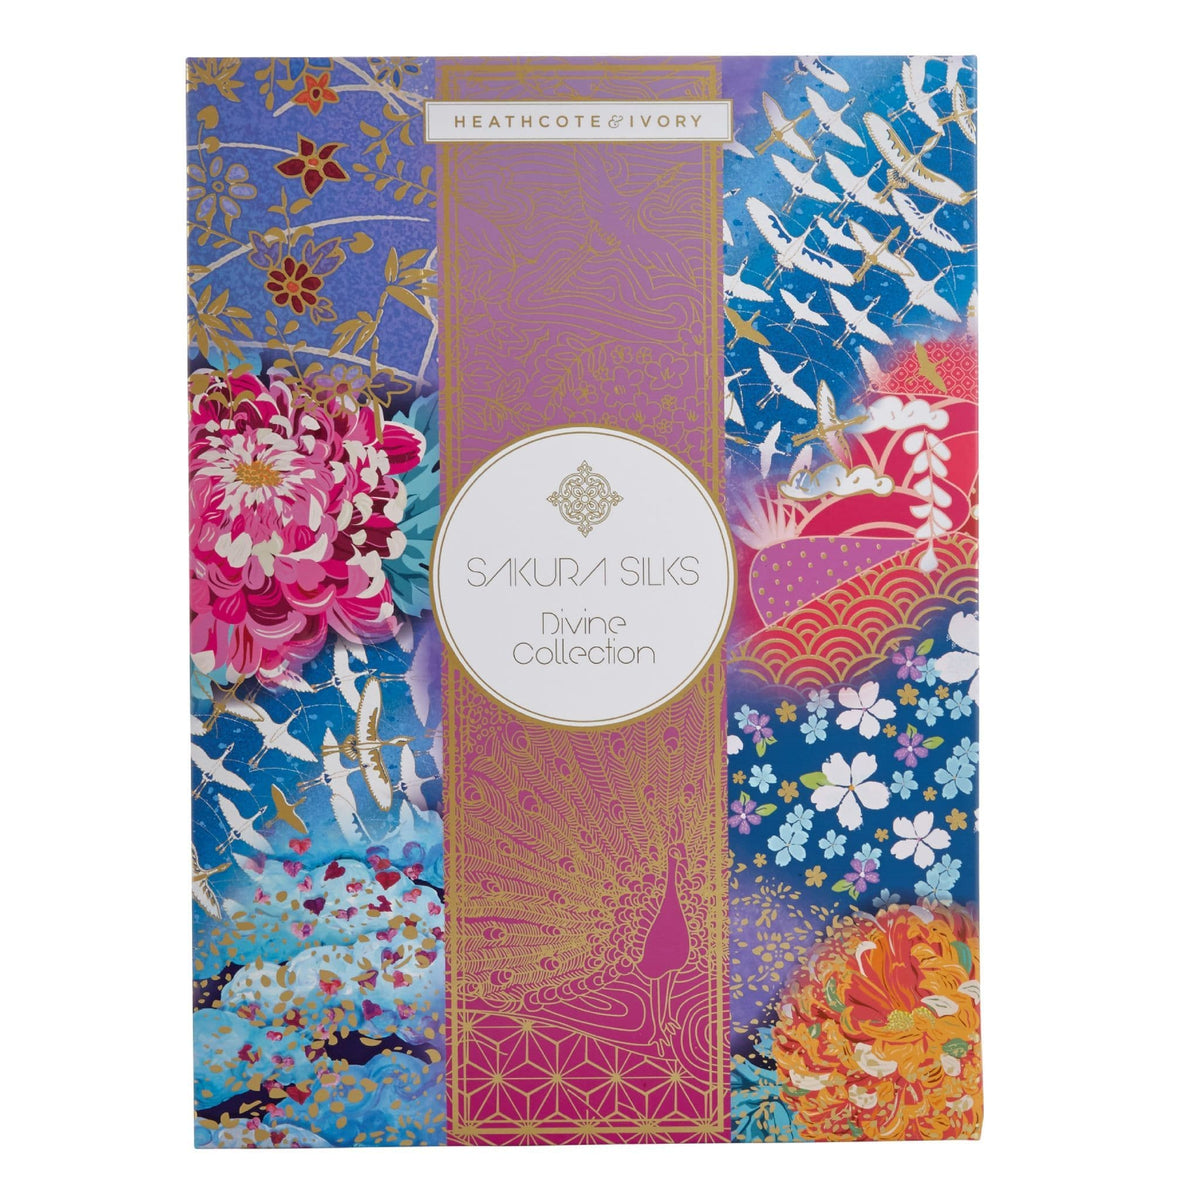 Set Divine Collection Heathcote & Ivory Sakura Silks